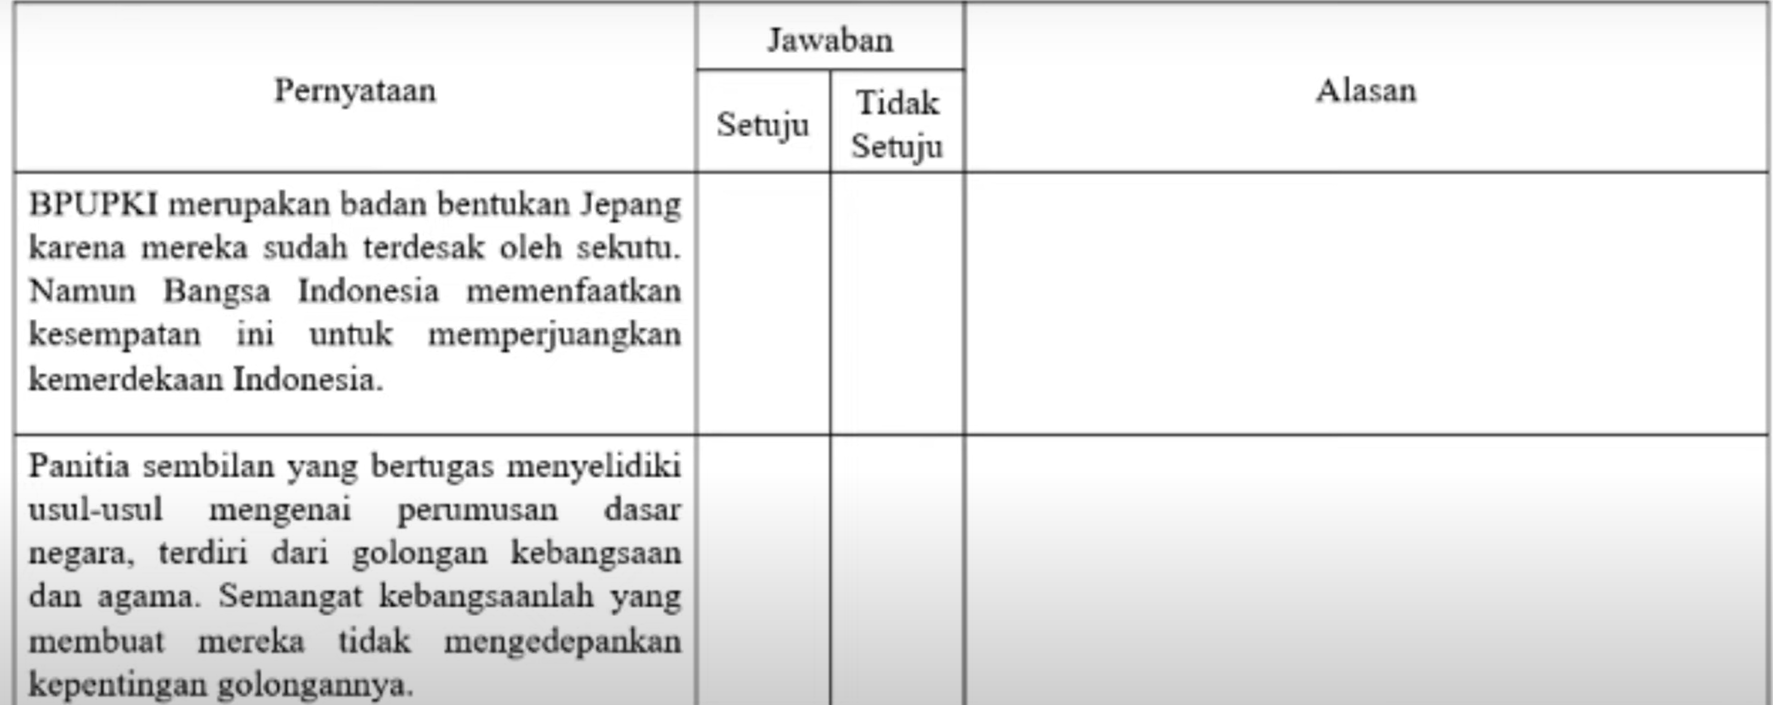 Nama 5 sila yang diperkenalkan Ir. Soekarno  sebagai dasar negara Indonesia